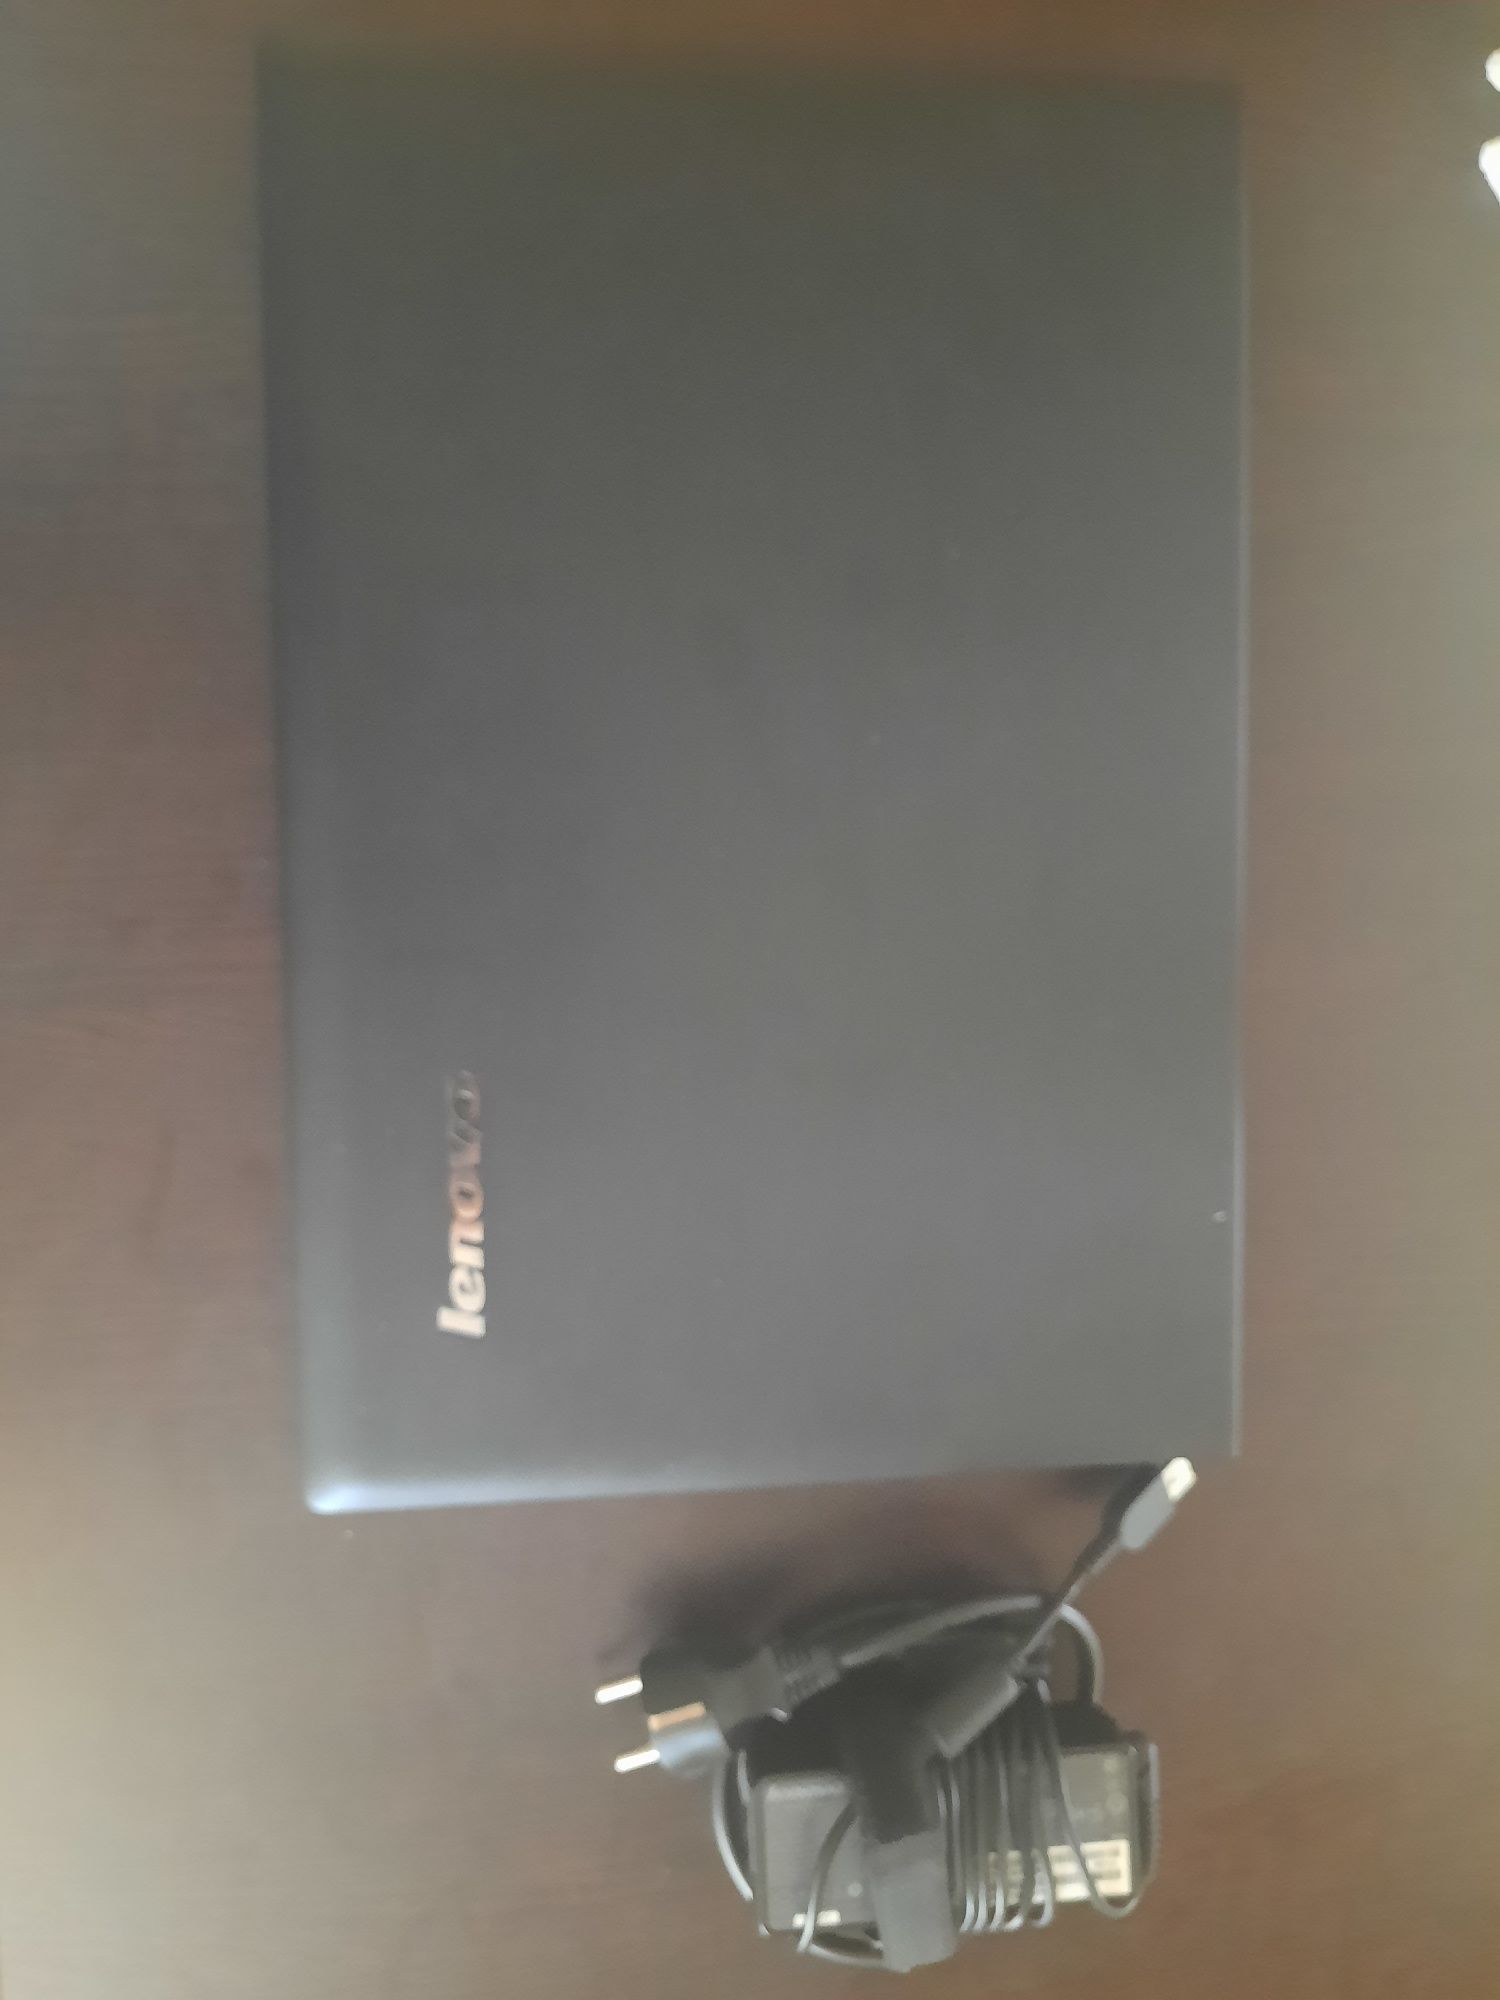 Pret negociabil! Vand Laptop Lenovo G50-70